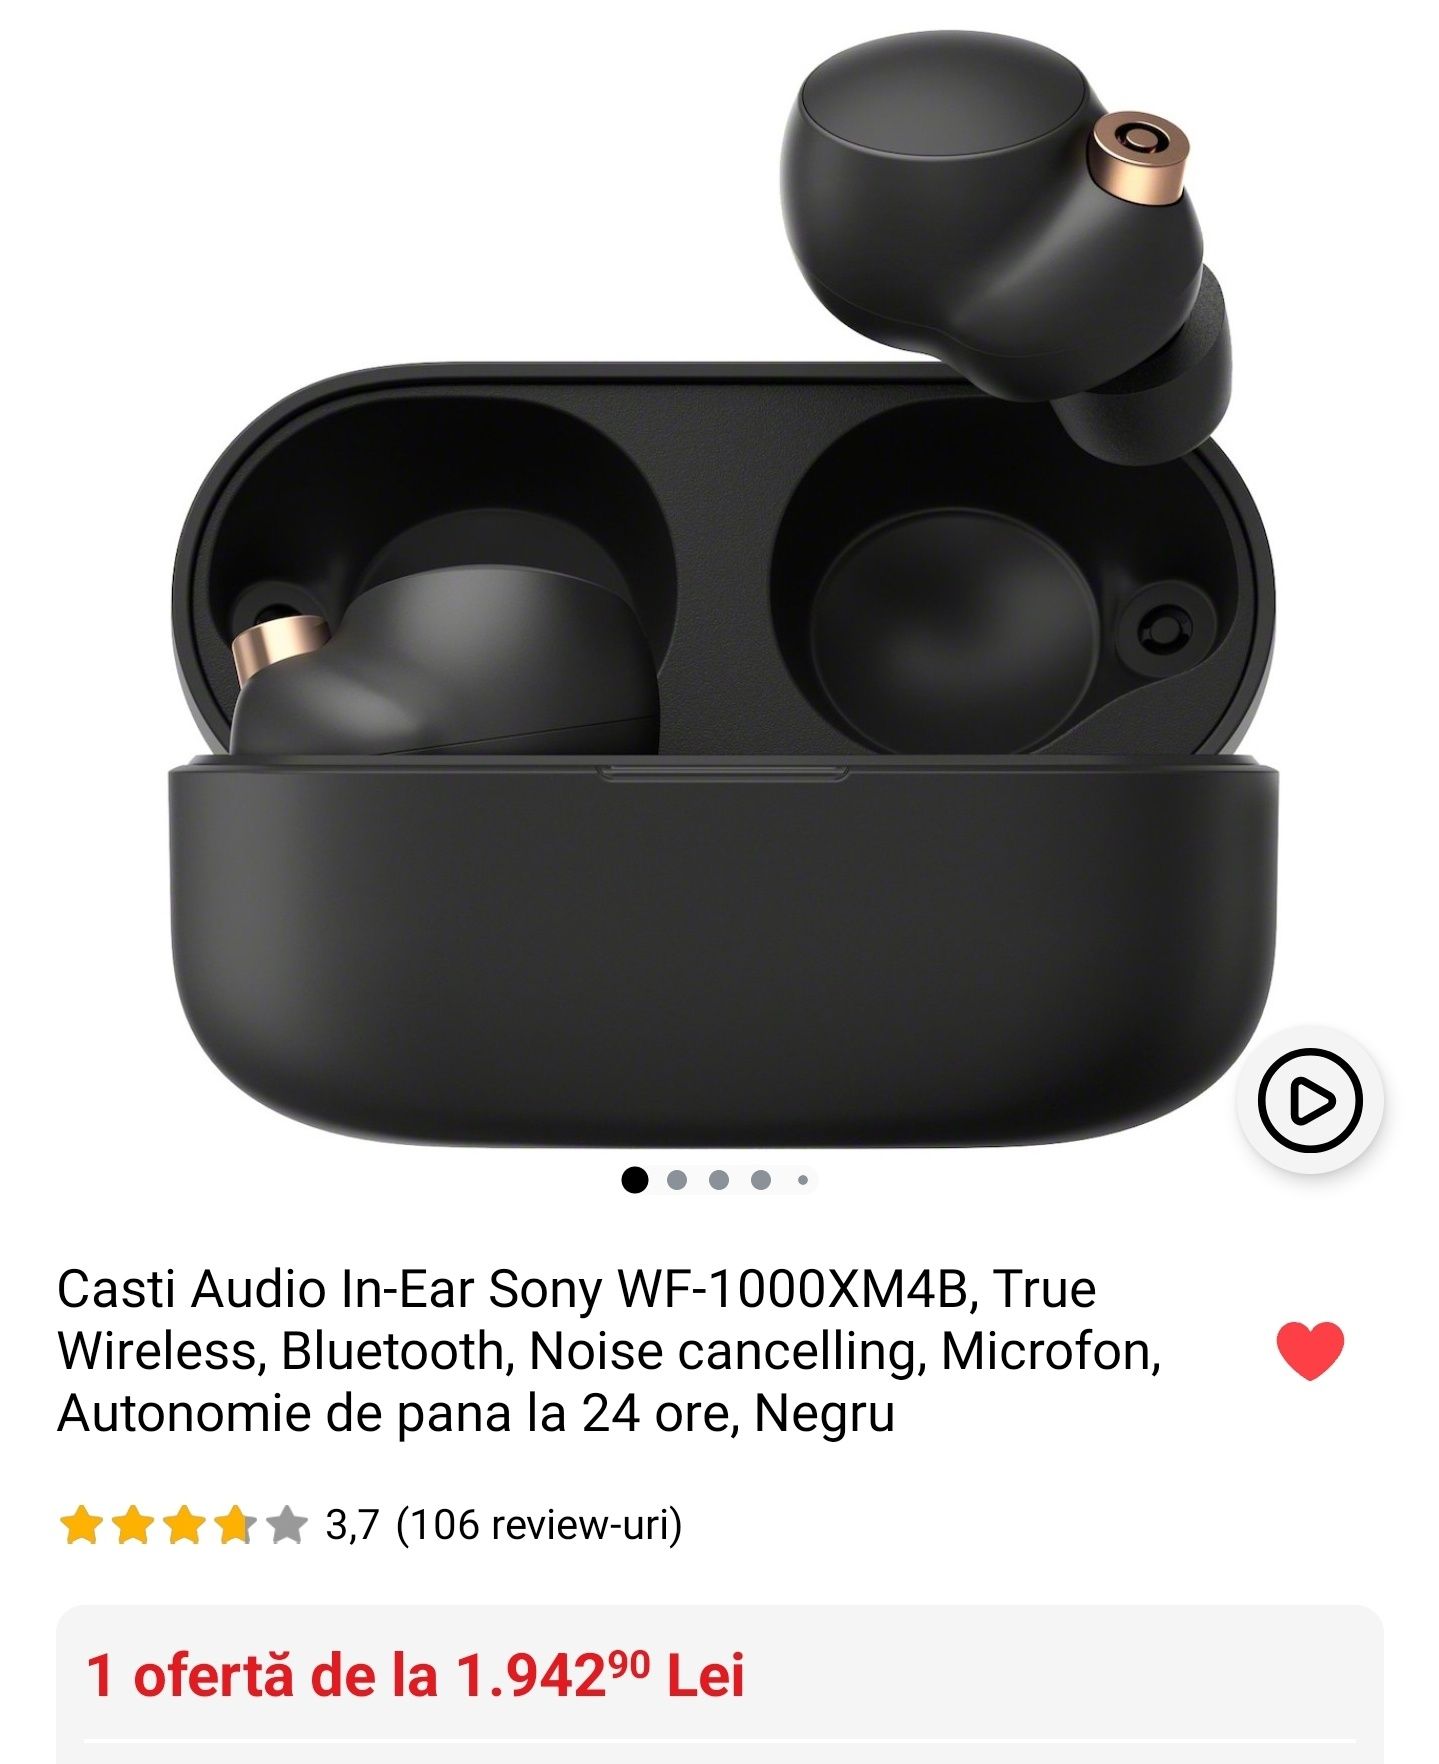 Casti In-Ear Sony WF-1000XM4B,Wireless,Noise cancell autonomie 8 ore